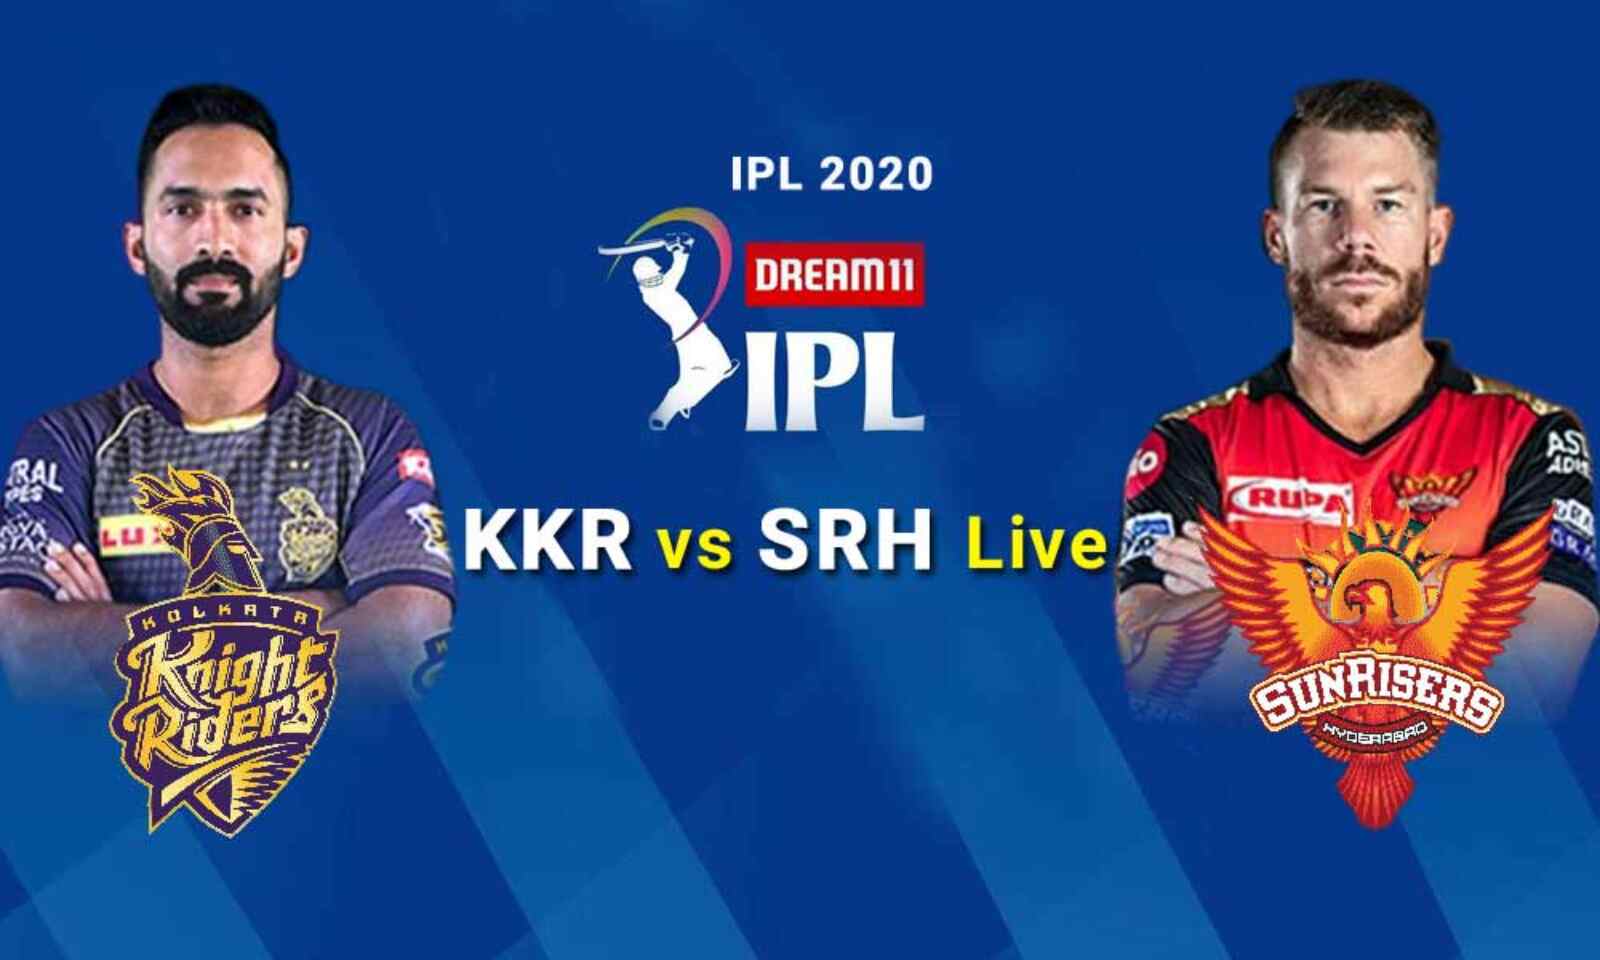 KKR vs SRH Live Cricket Score, IPL 2020 Updates Kolkata Knight Riders beats Sunrisers Hyderabad by 7 wickets